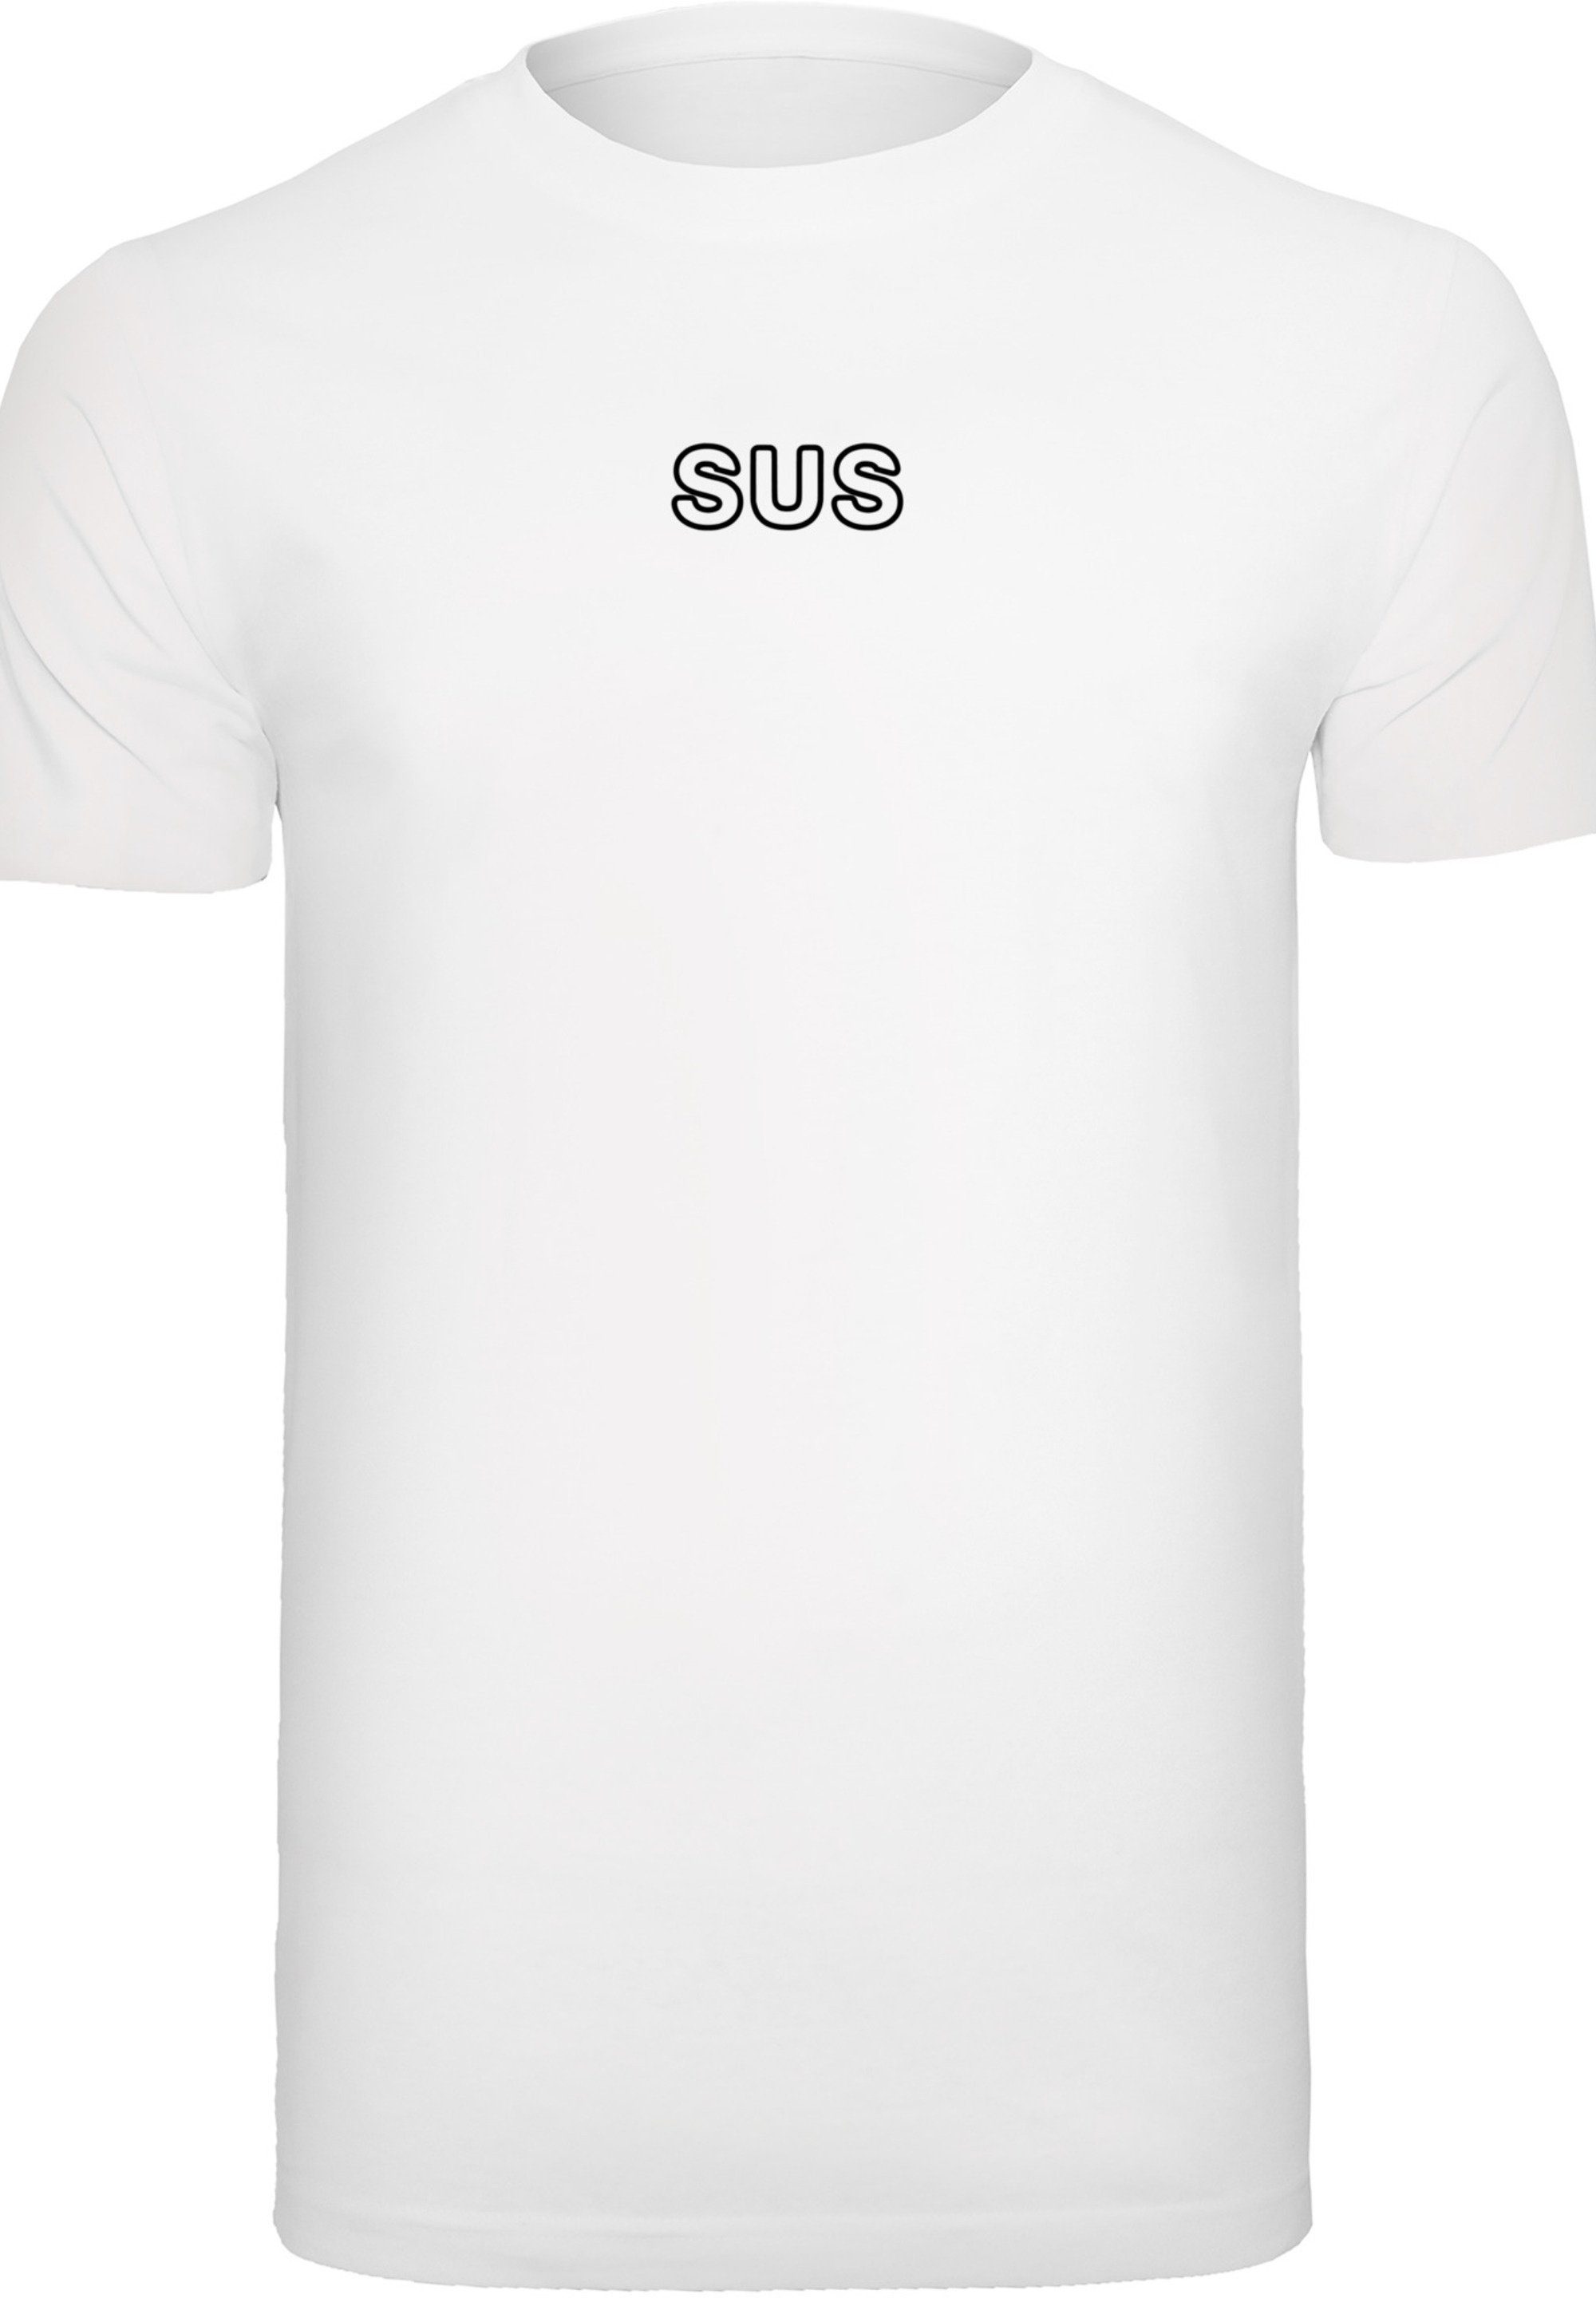 F4NT4STIC T-Shirt SUS slang 2022, weiß Jugendwort